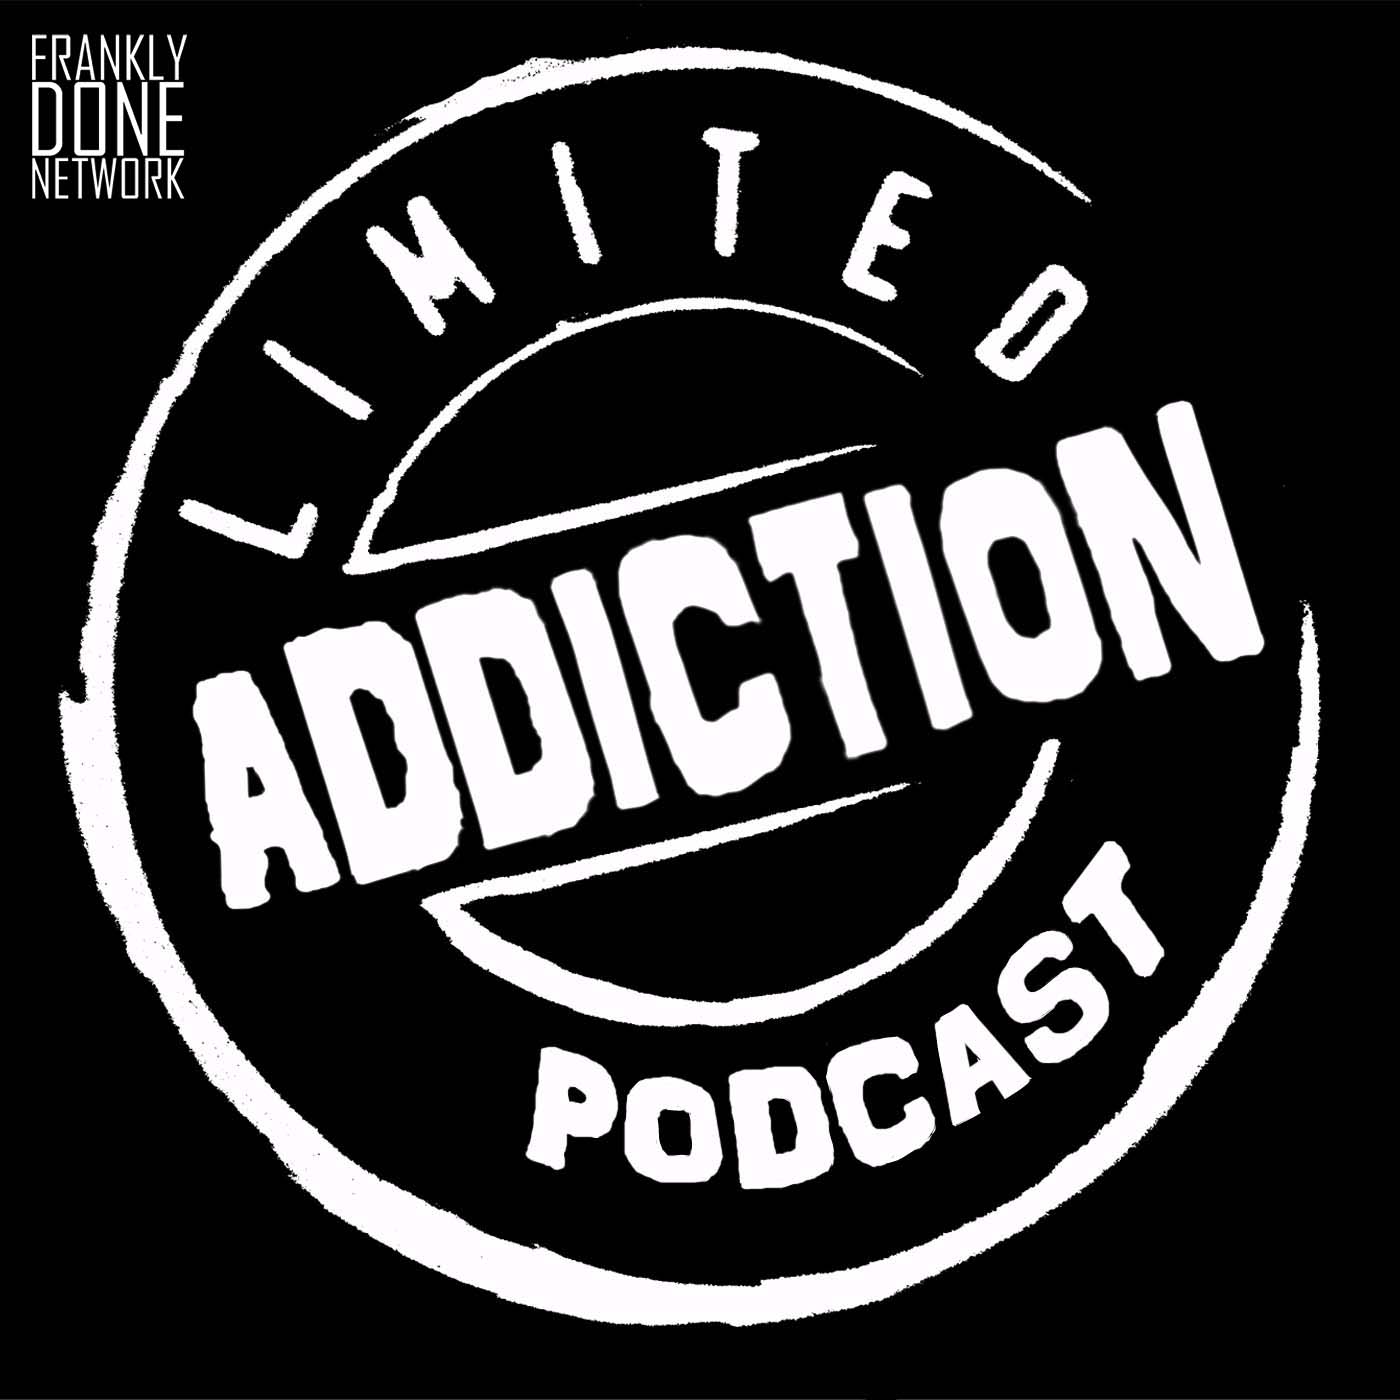 Limited Addiction Podcast